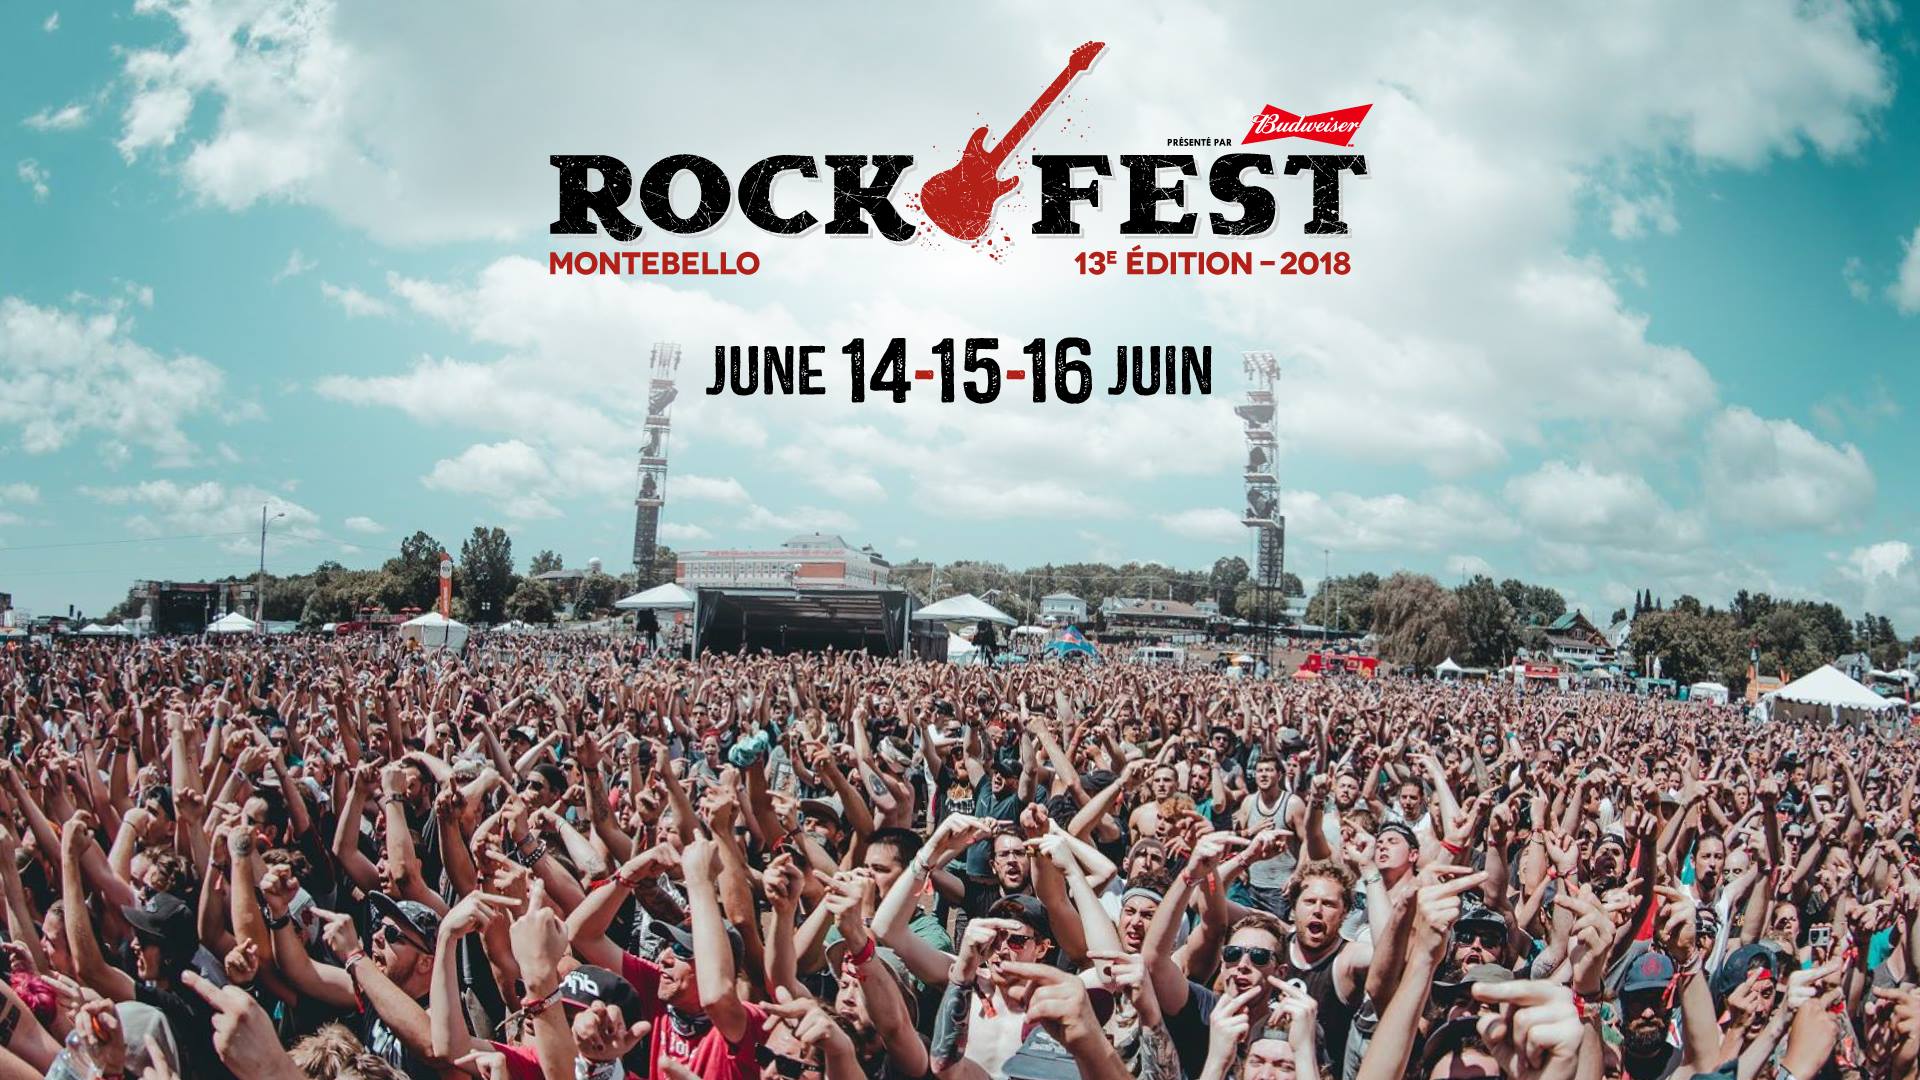 rockfest 2018 dates